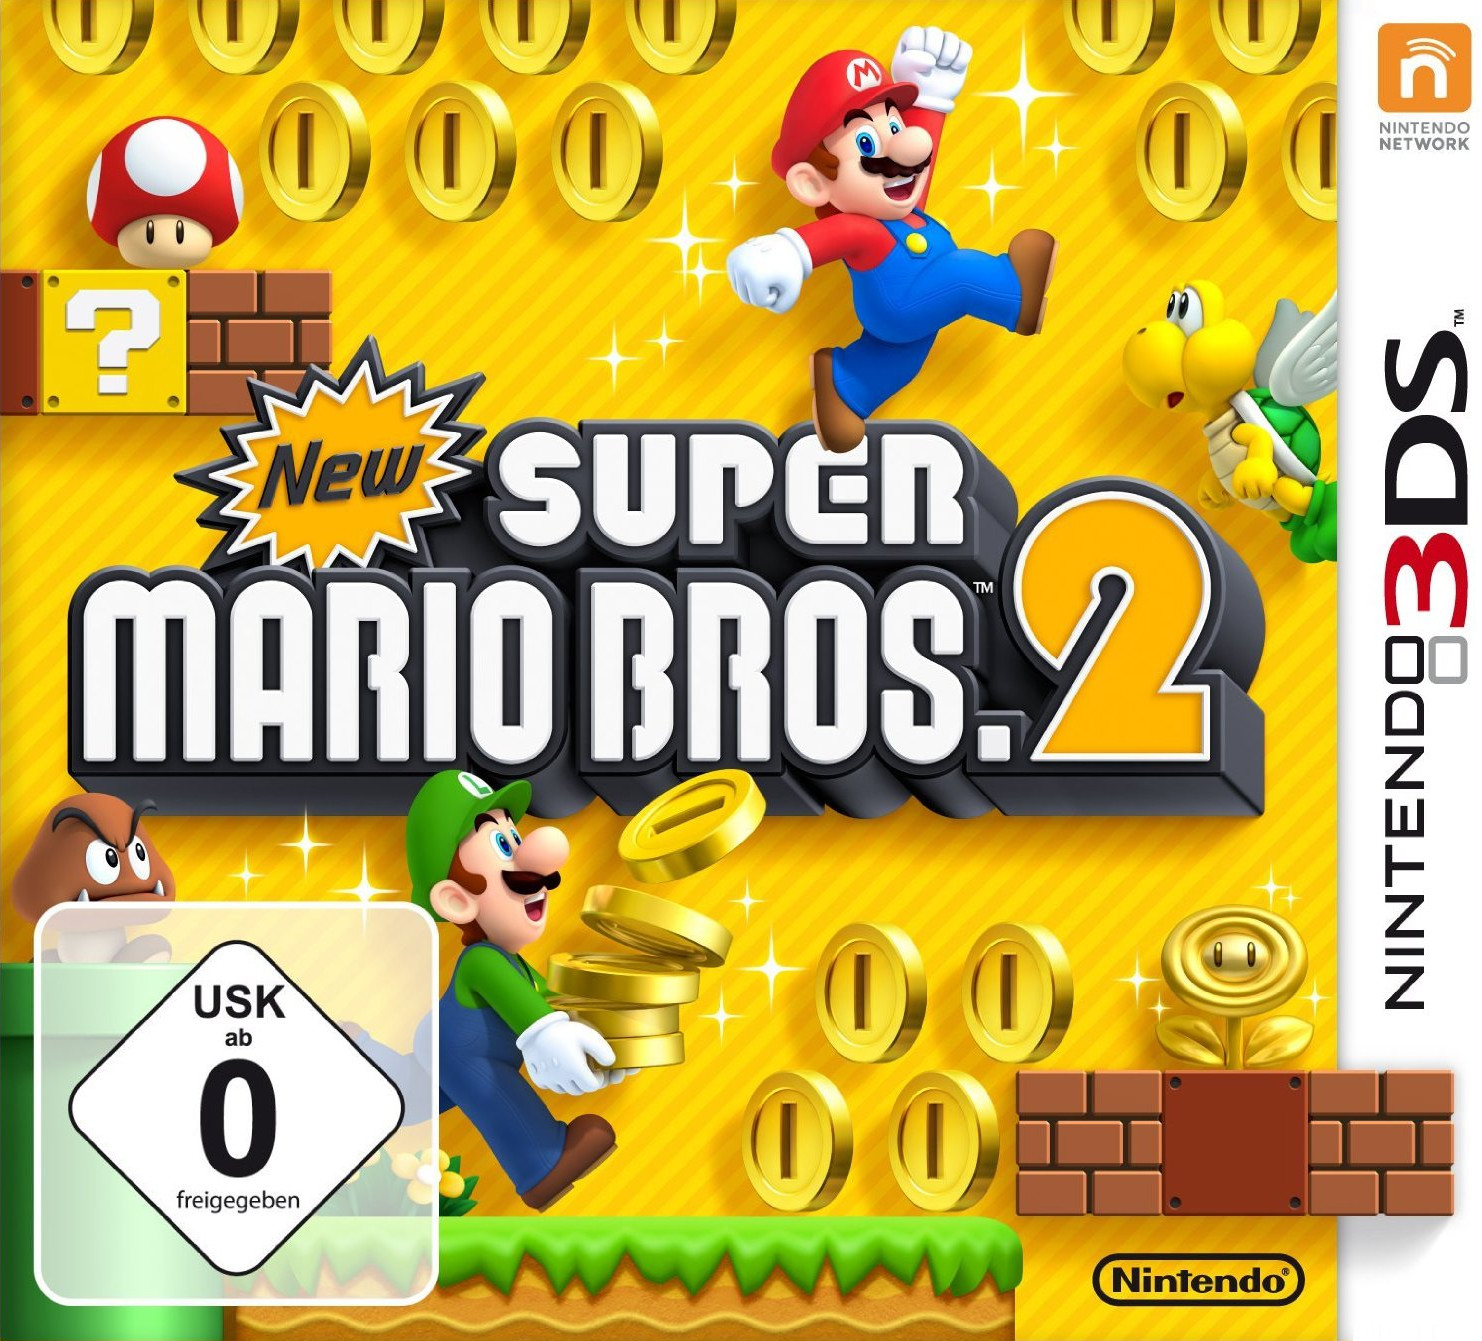 New Super Bros. 3DS] [Nintendo - 2 Mario